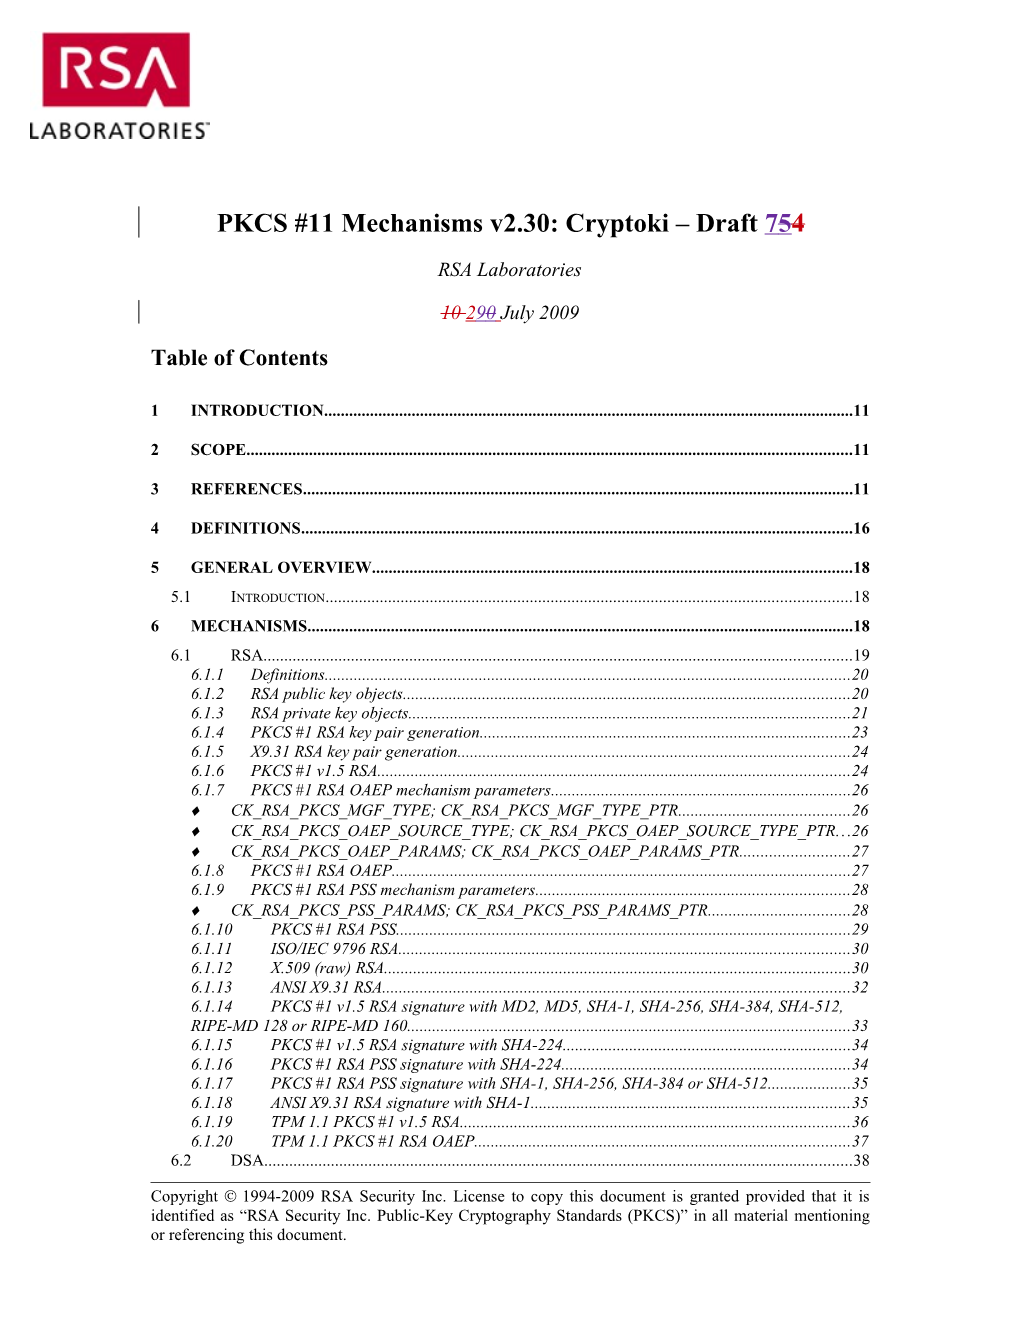 PKCS #11 V2.20: Cryptographic Token Interface Standard